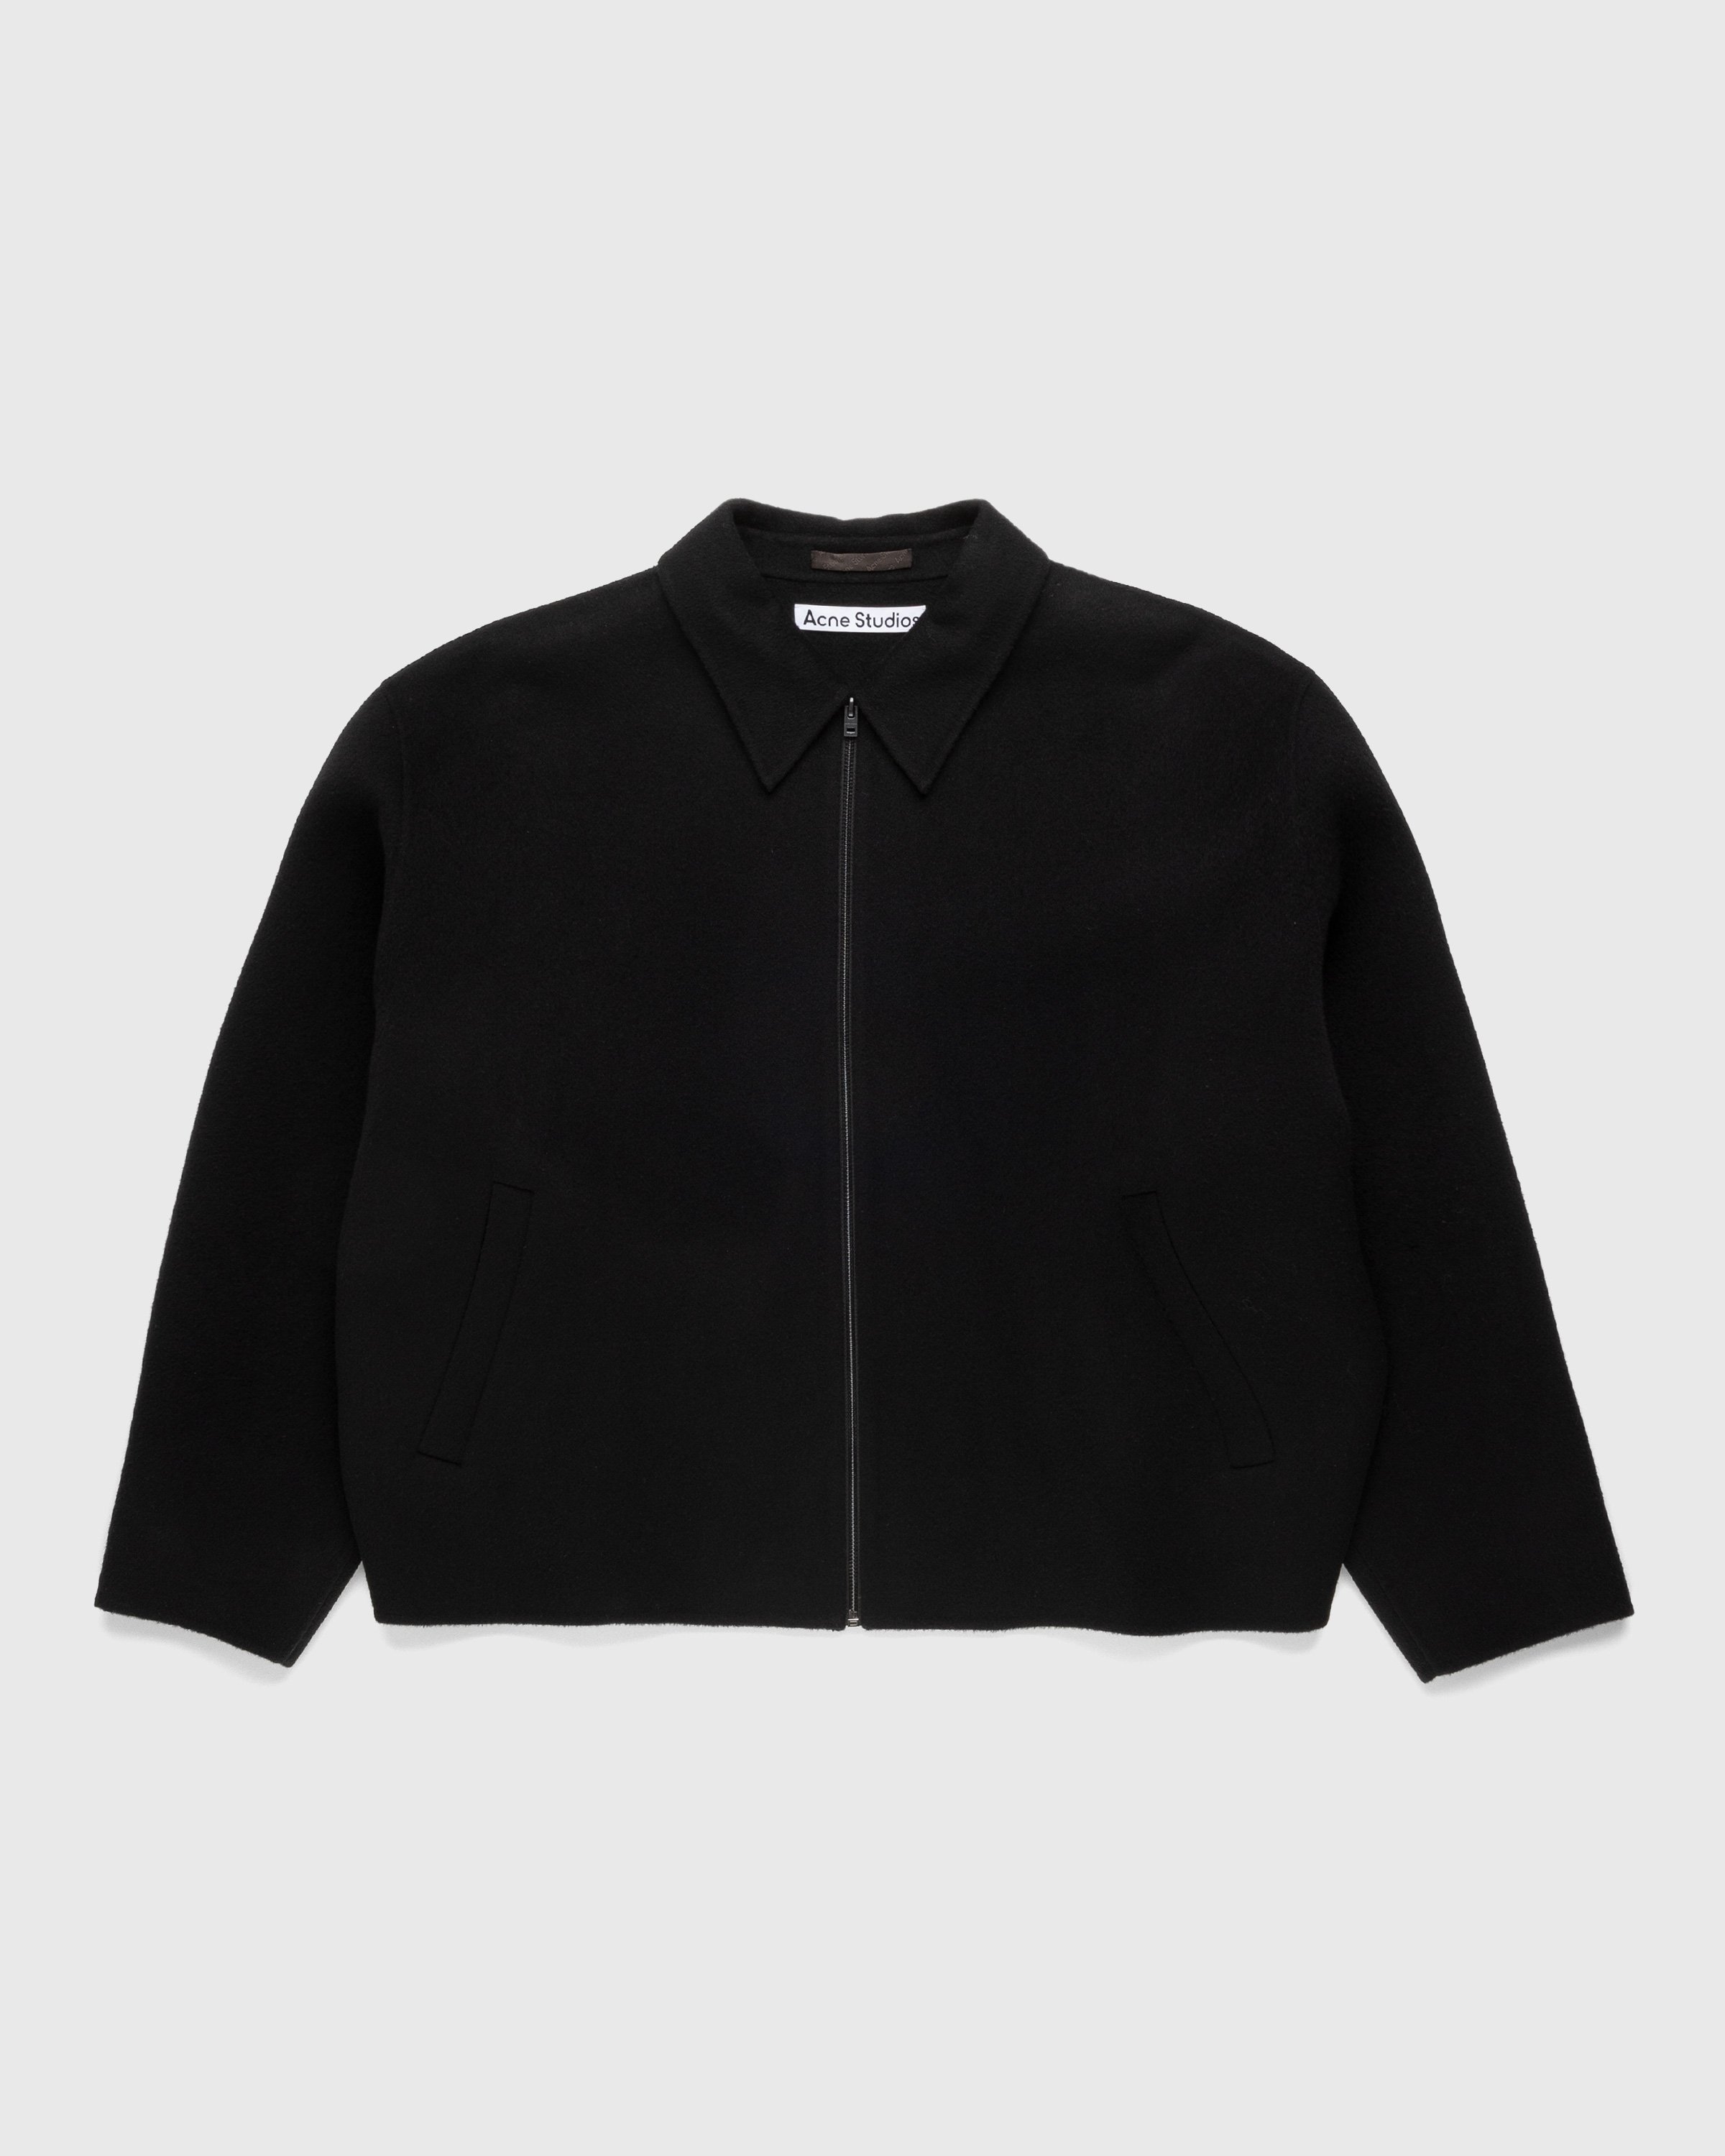 Acne Studios - Wool Zipper Jacket Black - Clothing - Black - Image 1